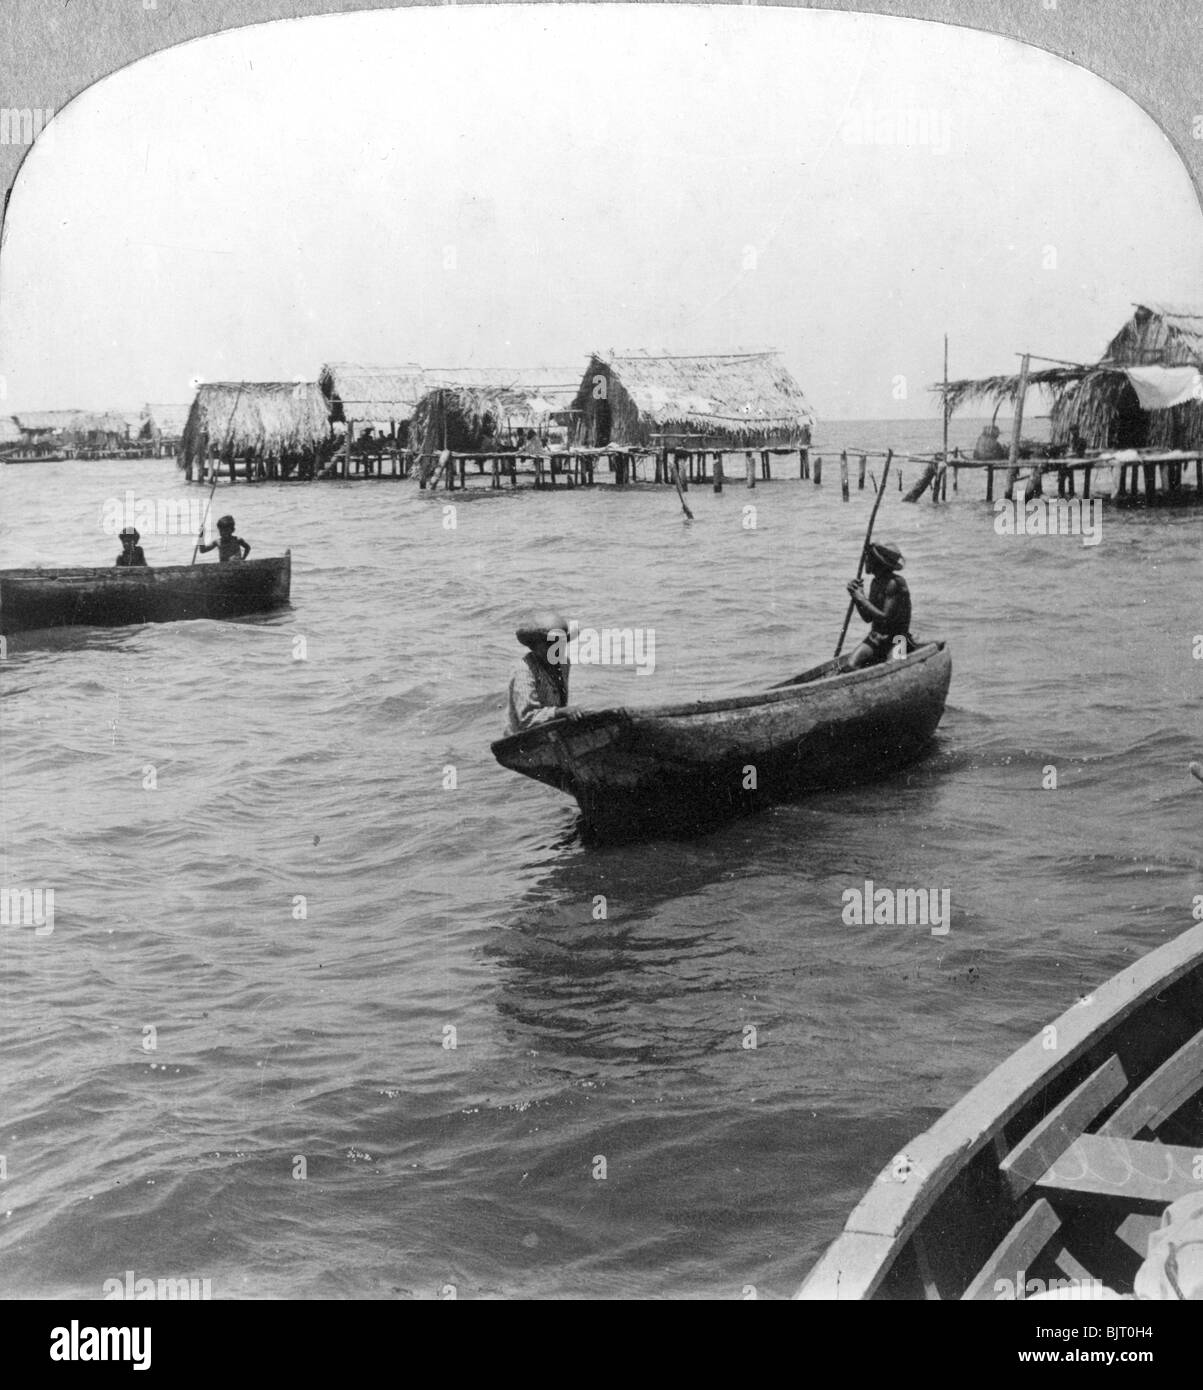 Indians in log canoes, Lake Maracaibo, Venezuela, c1900s. Artist: Unknown Stock Photo